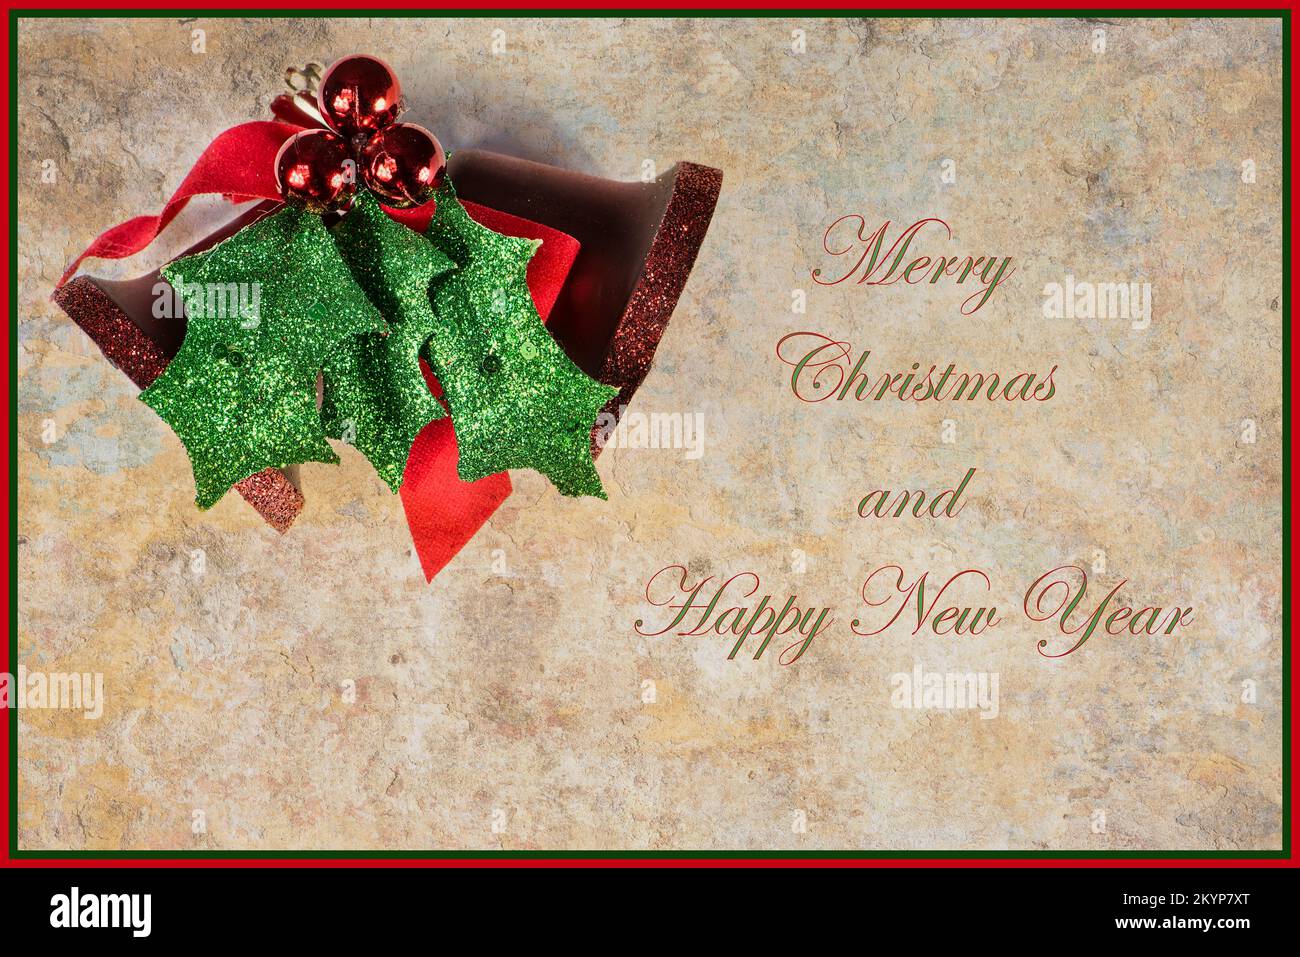 Tarjeta de felicitación navideña con texto Merry Christmas con adornos rojos y verdes Foto de stock